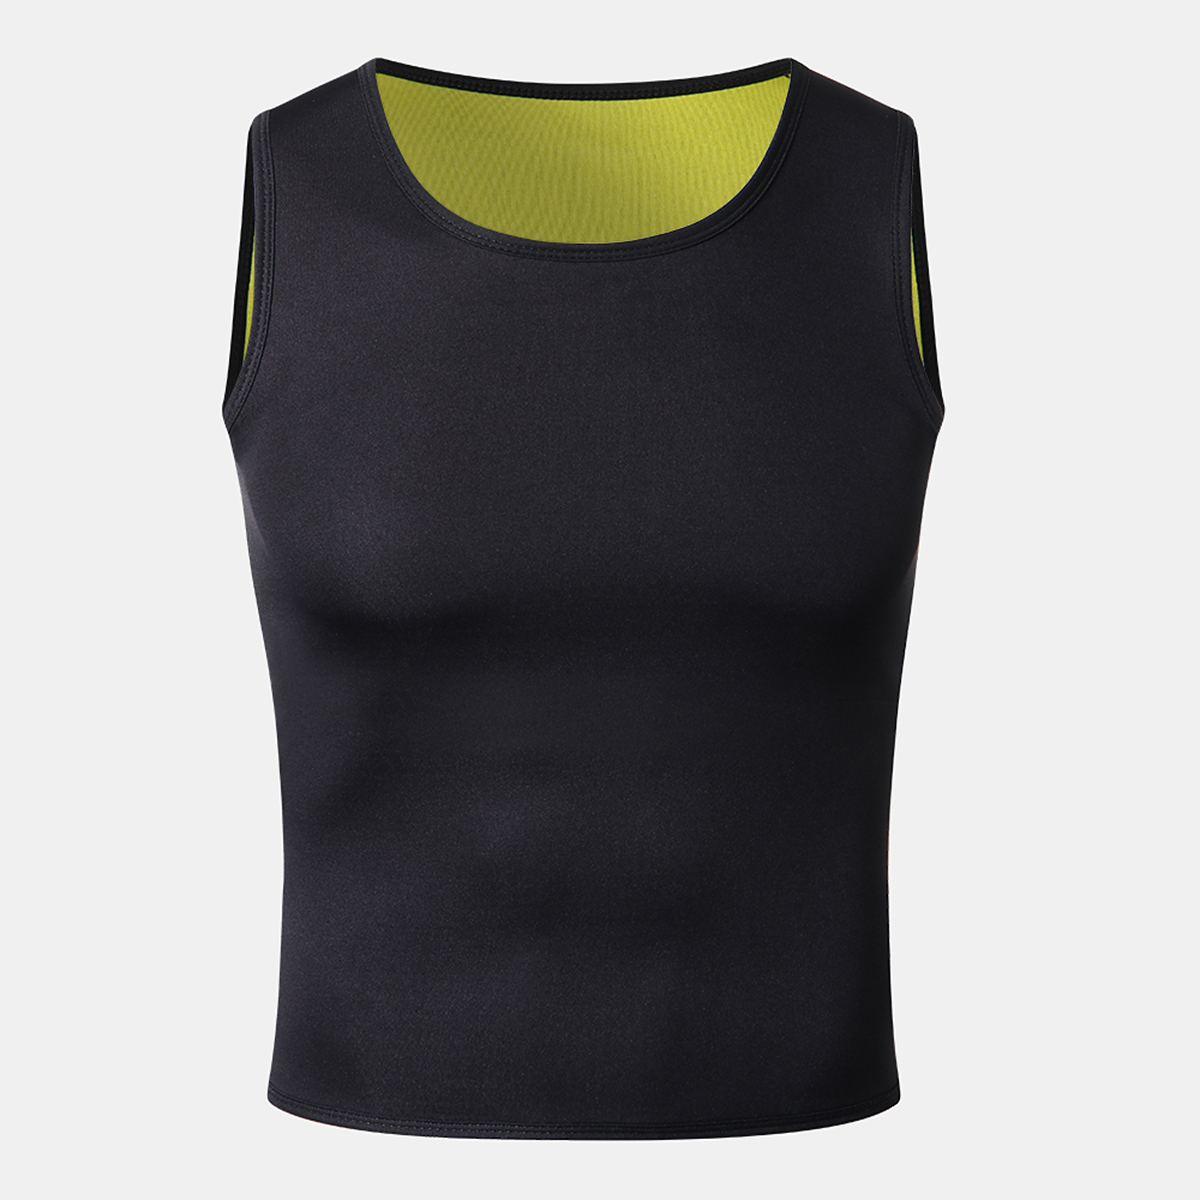 Mens-Neoprene-Body-Shaper-Slimming-Sweat-Trainer-Yoga-Gym-Cincher-Vest-1456107-5